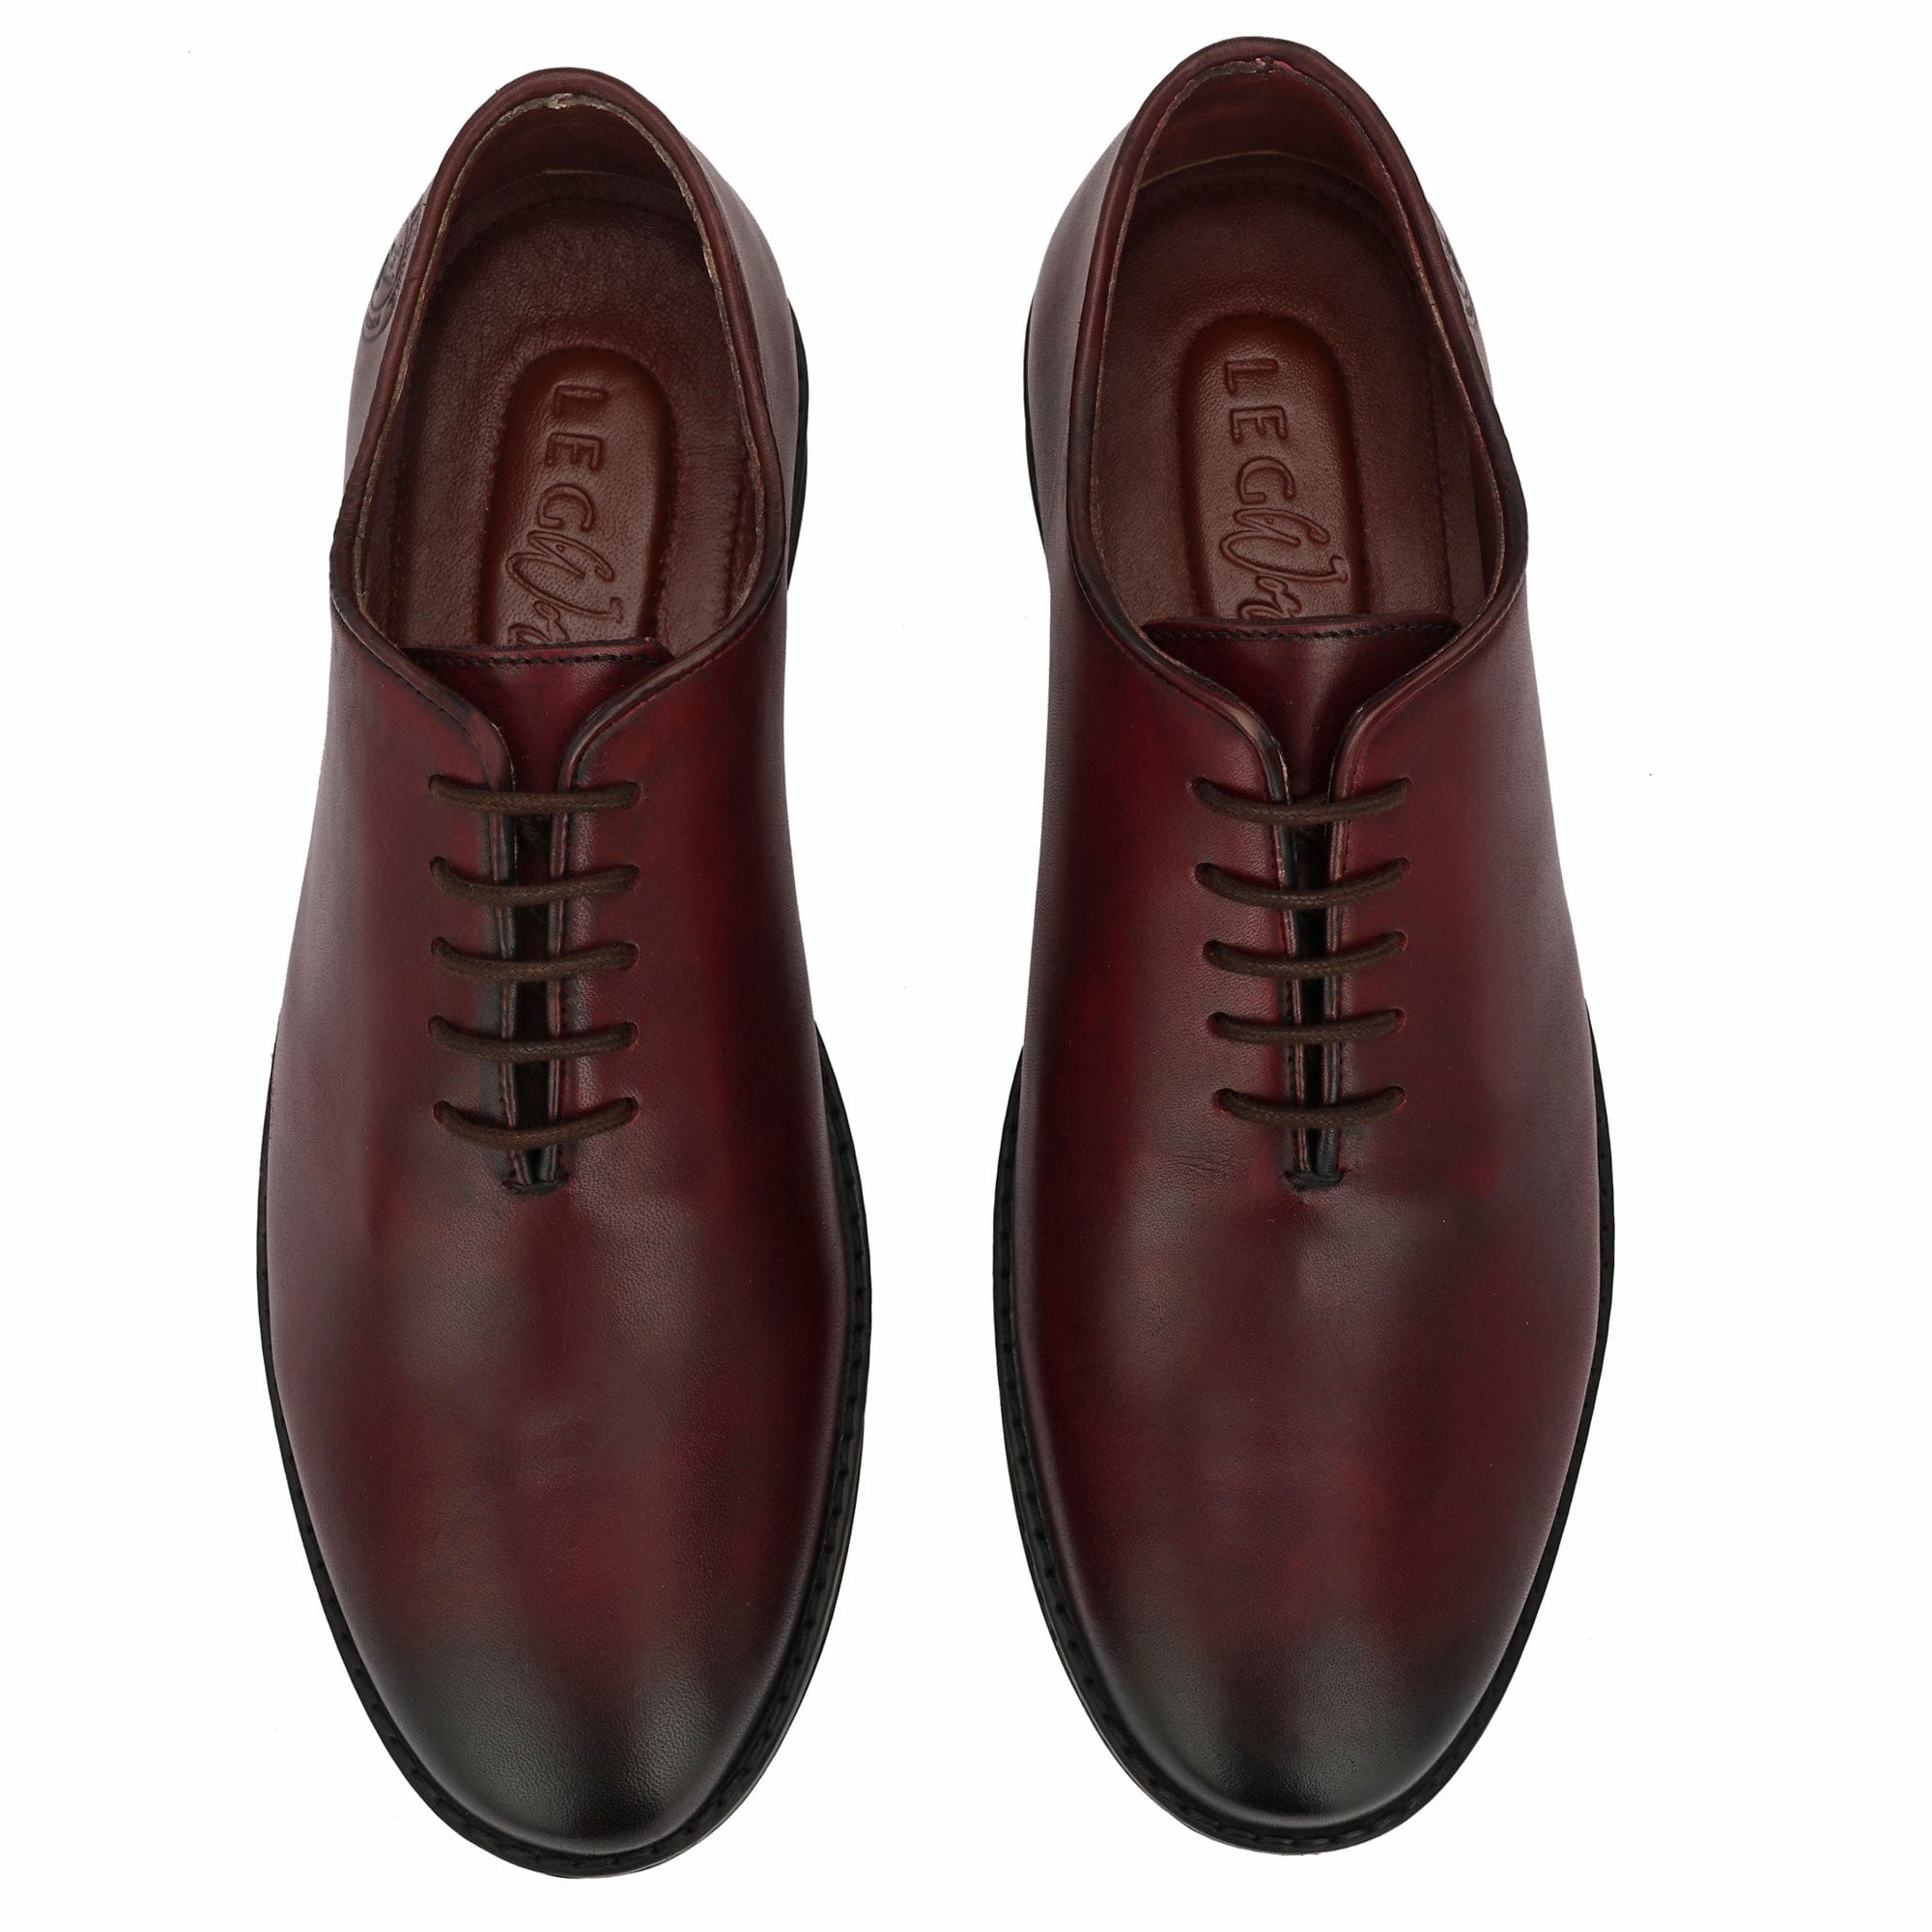 Legwork Wholecut Oxford 2.0 Cognac Red Italian Leather Shoes